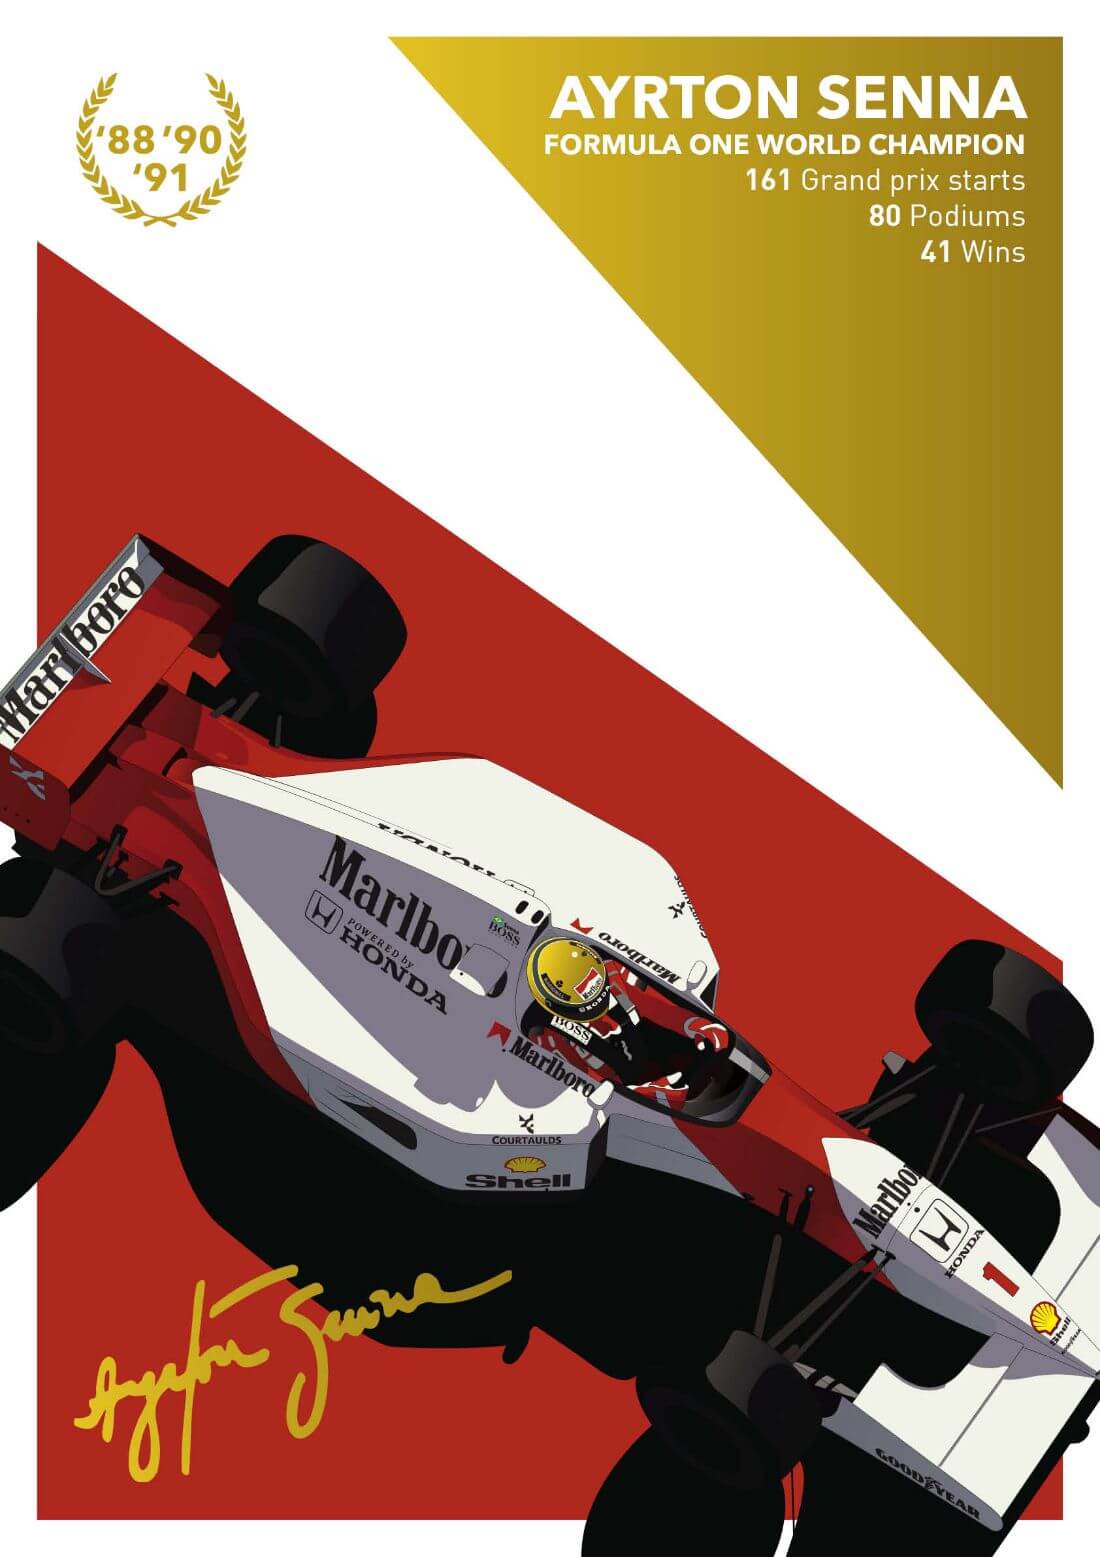 Ayrton Senna - Formula 1 Racing - Honda - Motosport Poster by Joel Jerry, Buy Posters, Frames, Canvas & Digital Art Prints